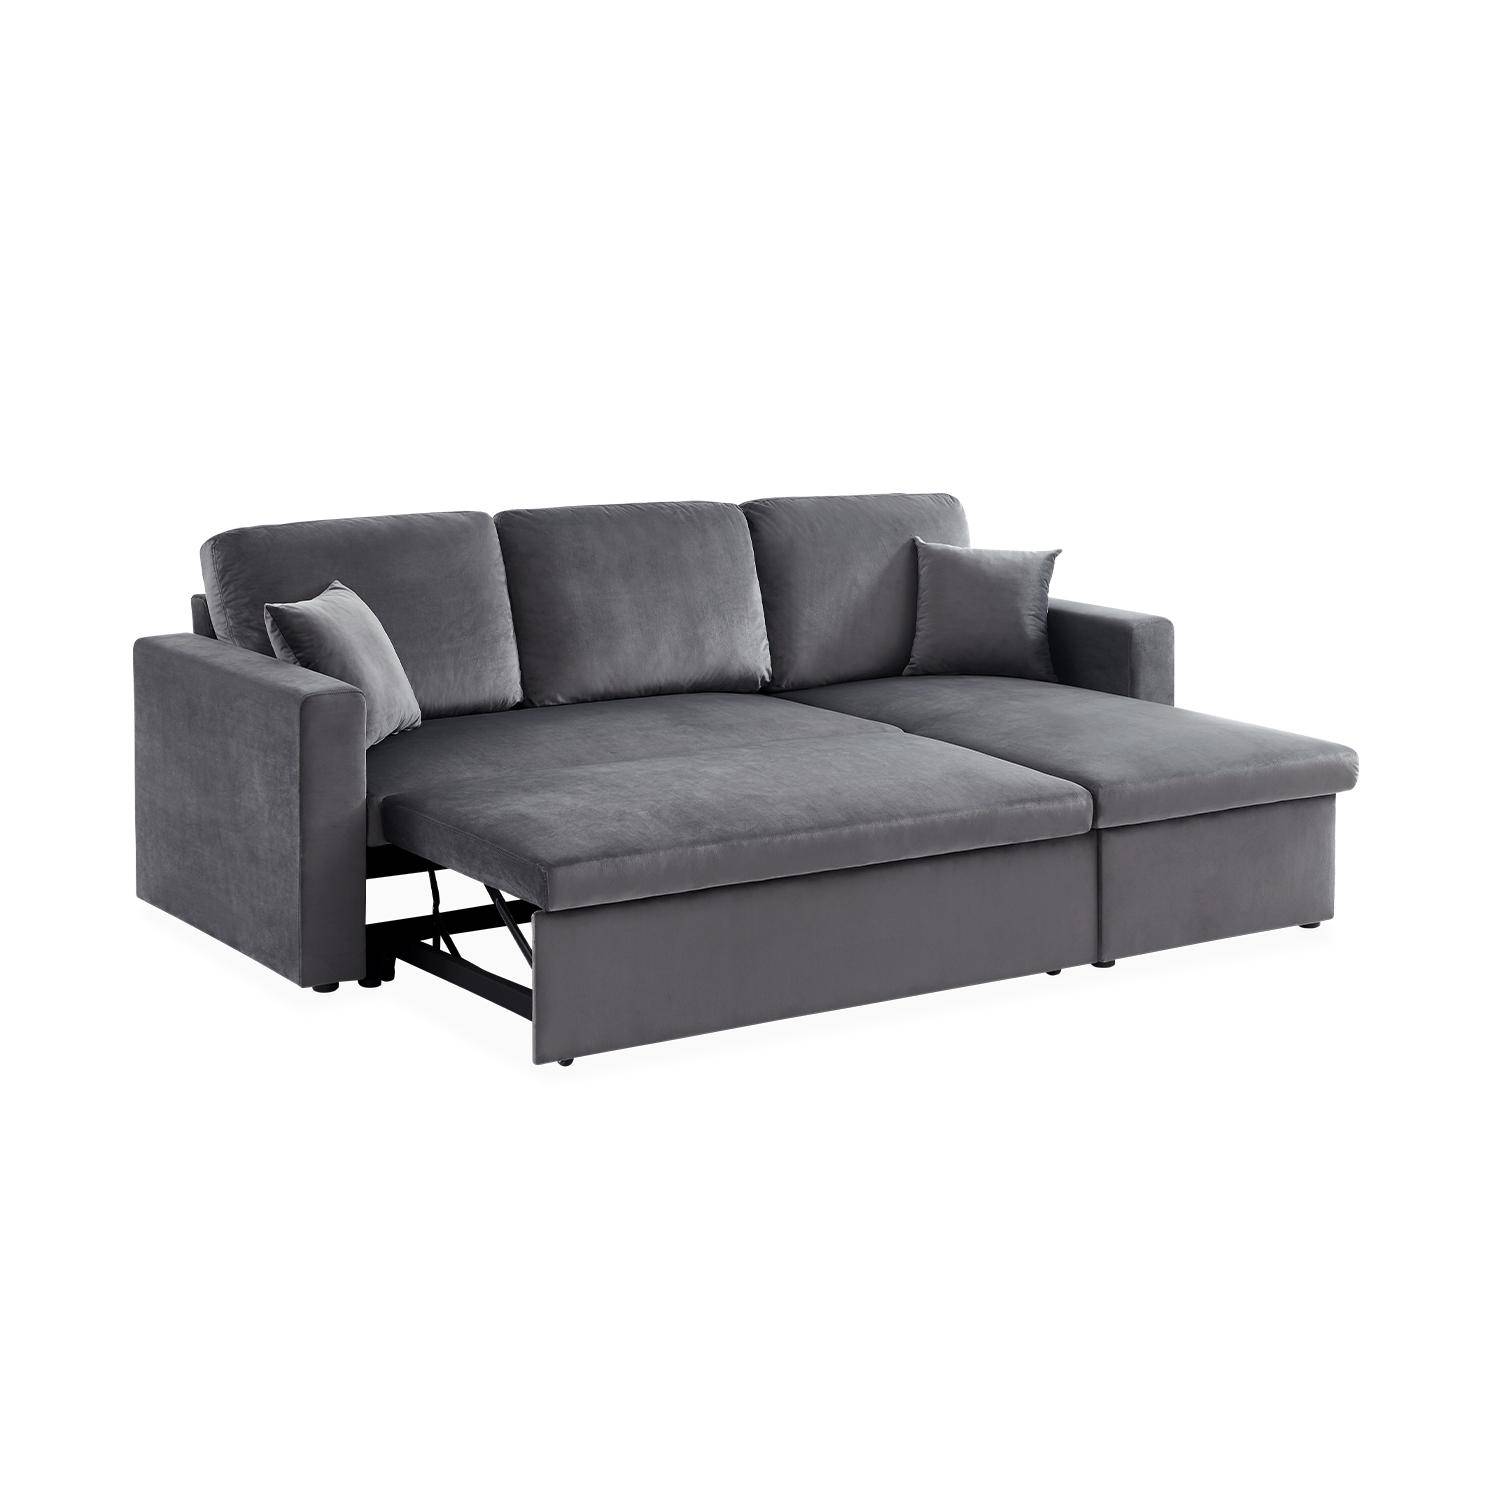 Dark grey velvet 3-seater convertible corner sofa, reversible corner armchair, storage box, modular bed,sweeek,Photo6